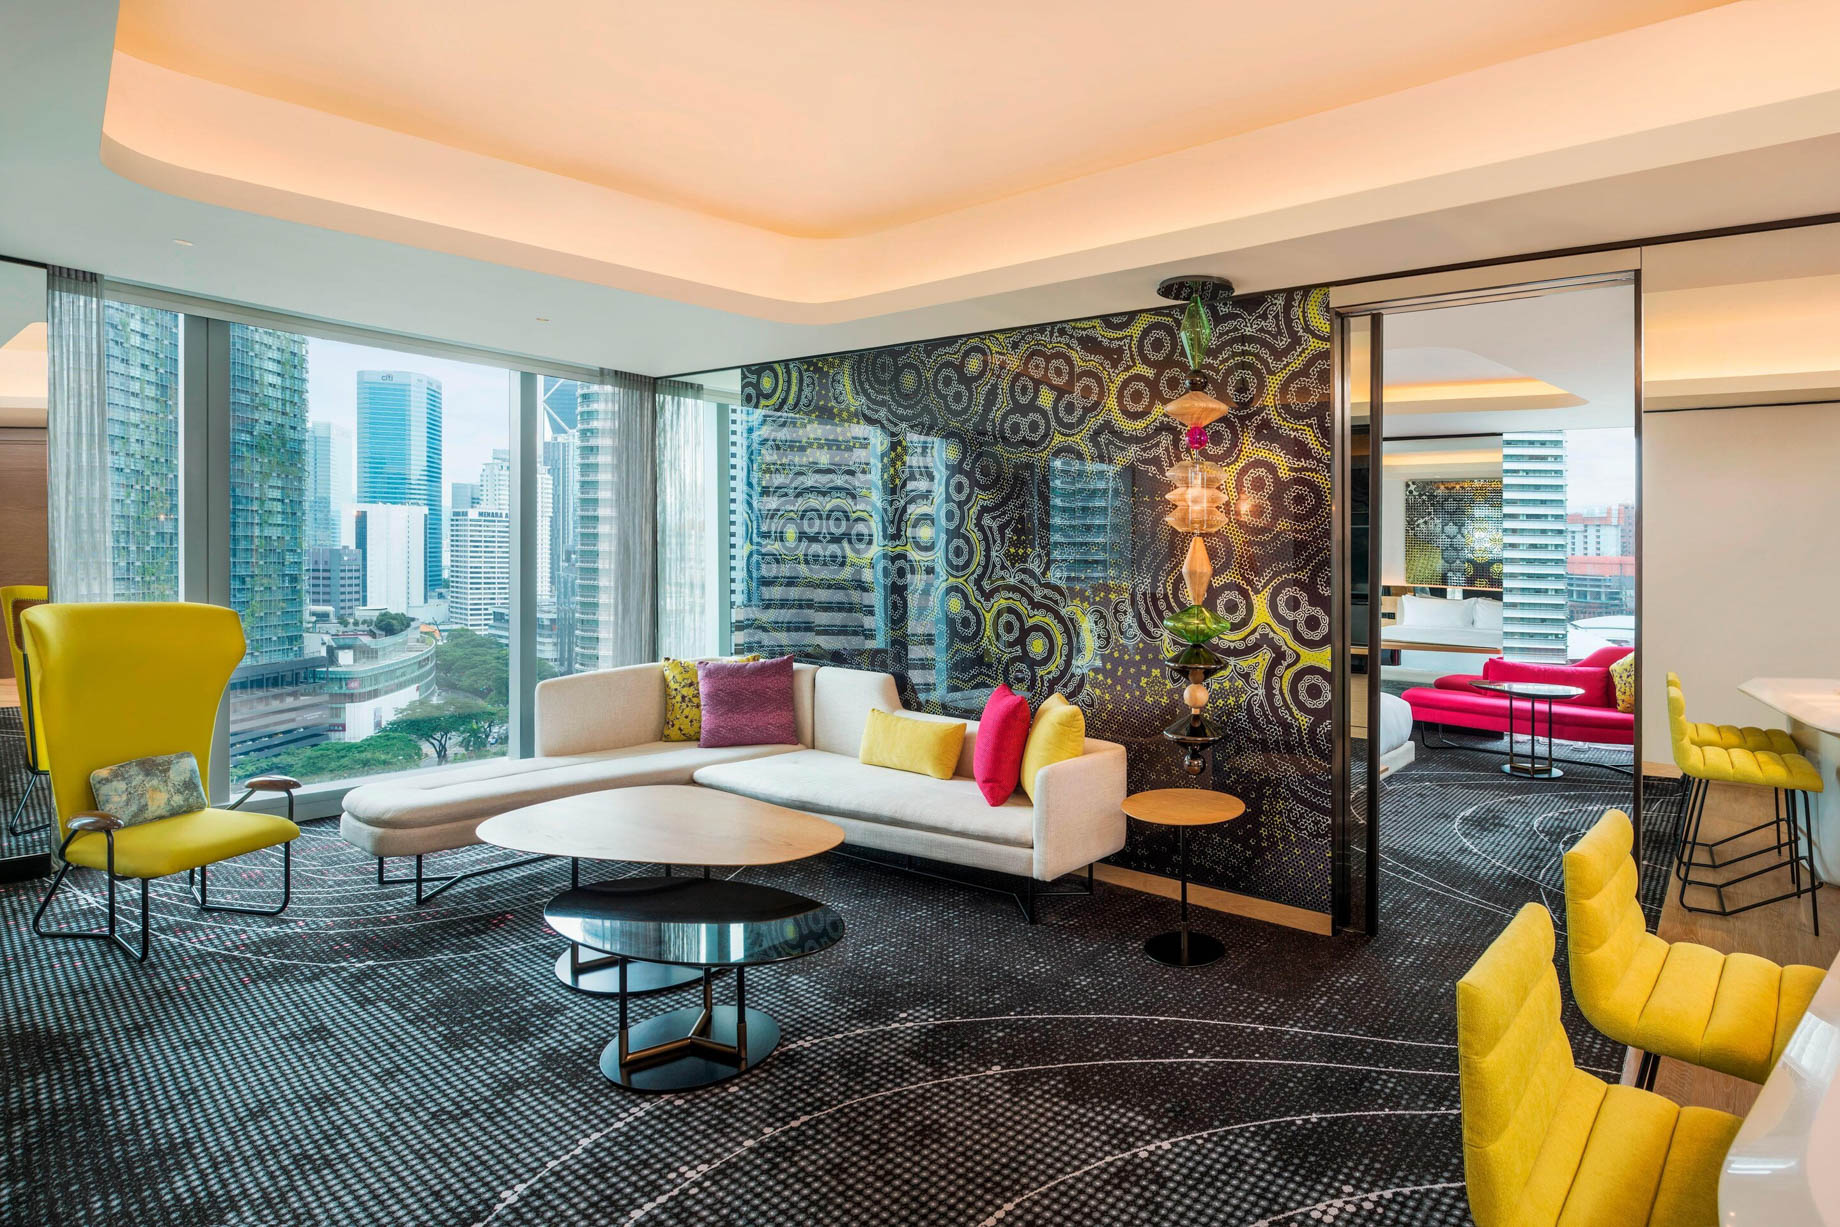 W Kuala Lumpur Hotel – Kuala Lumpur, Malaysia – Marvelous Suite Living Room